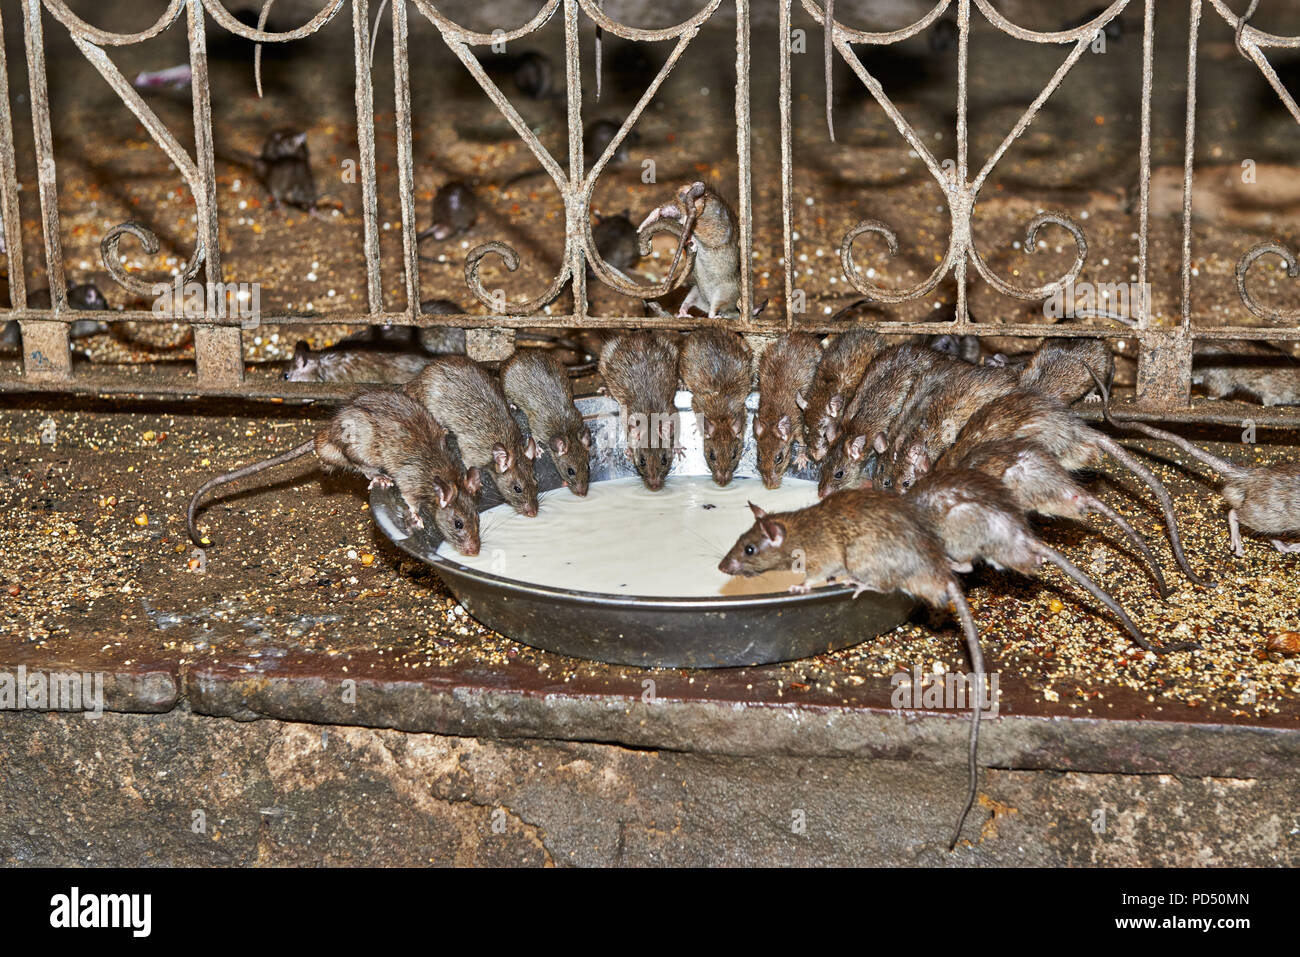 Rats feeding on a bowl with milk in Temple of Rats, Karni Mata Temple, Deshnoke, Rajasthan, India Stock Photo